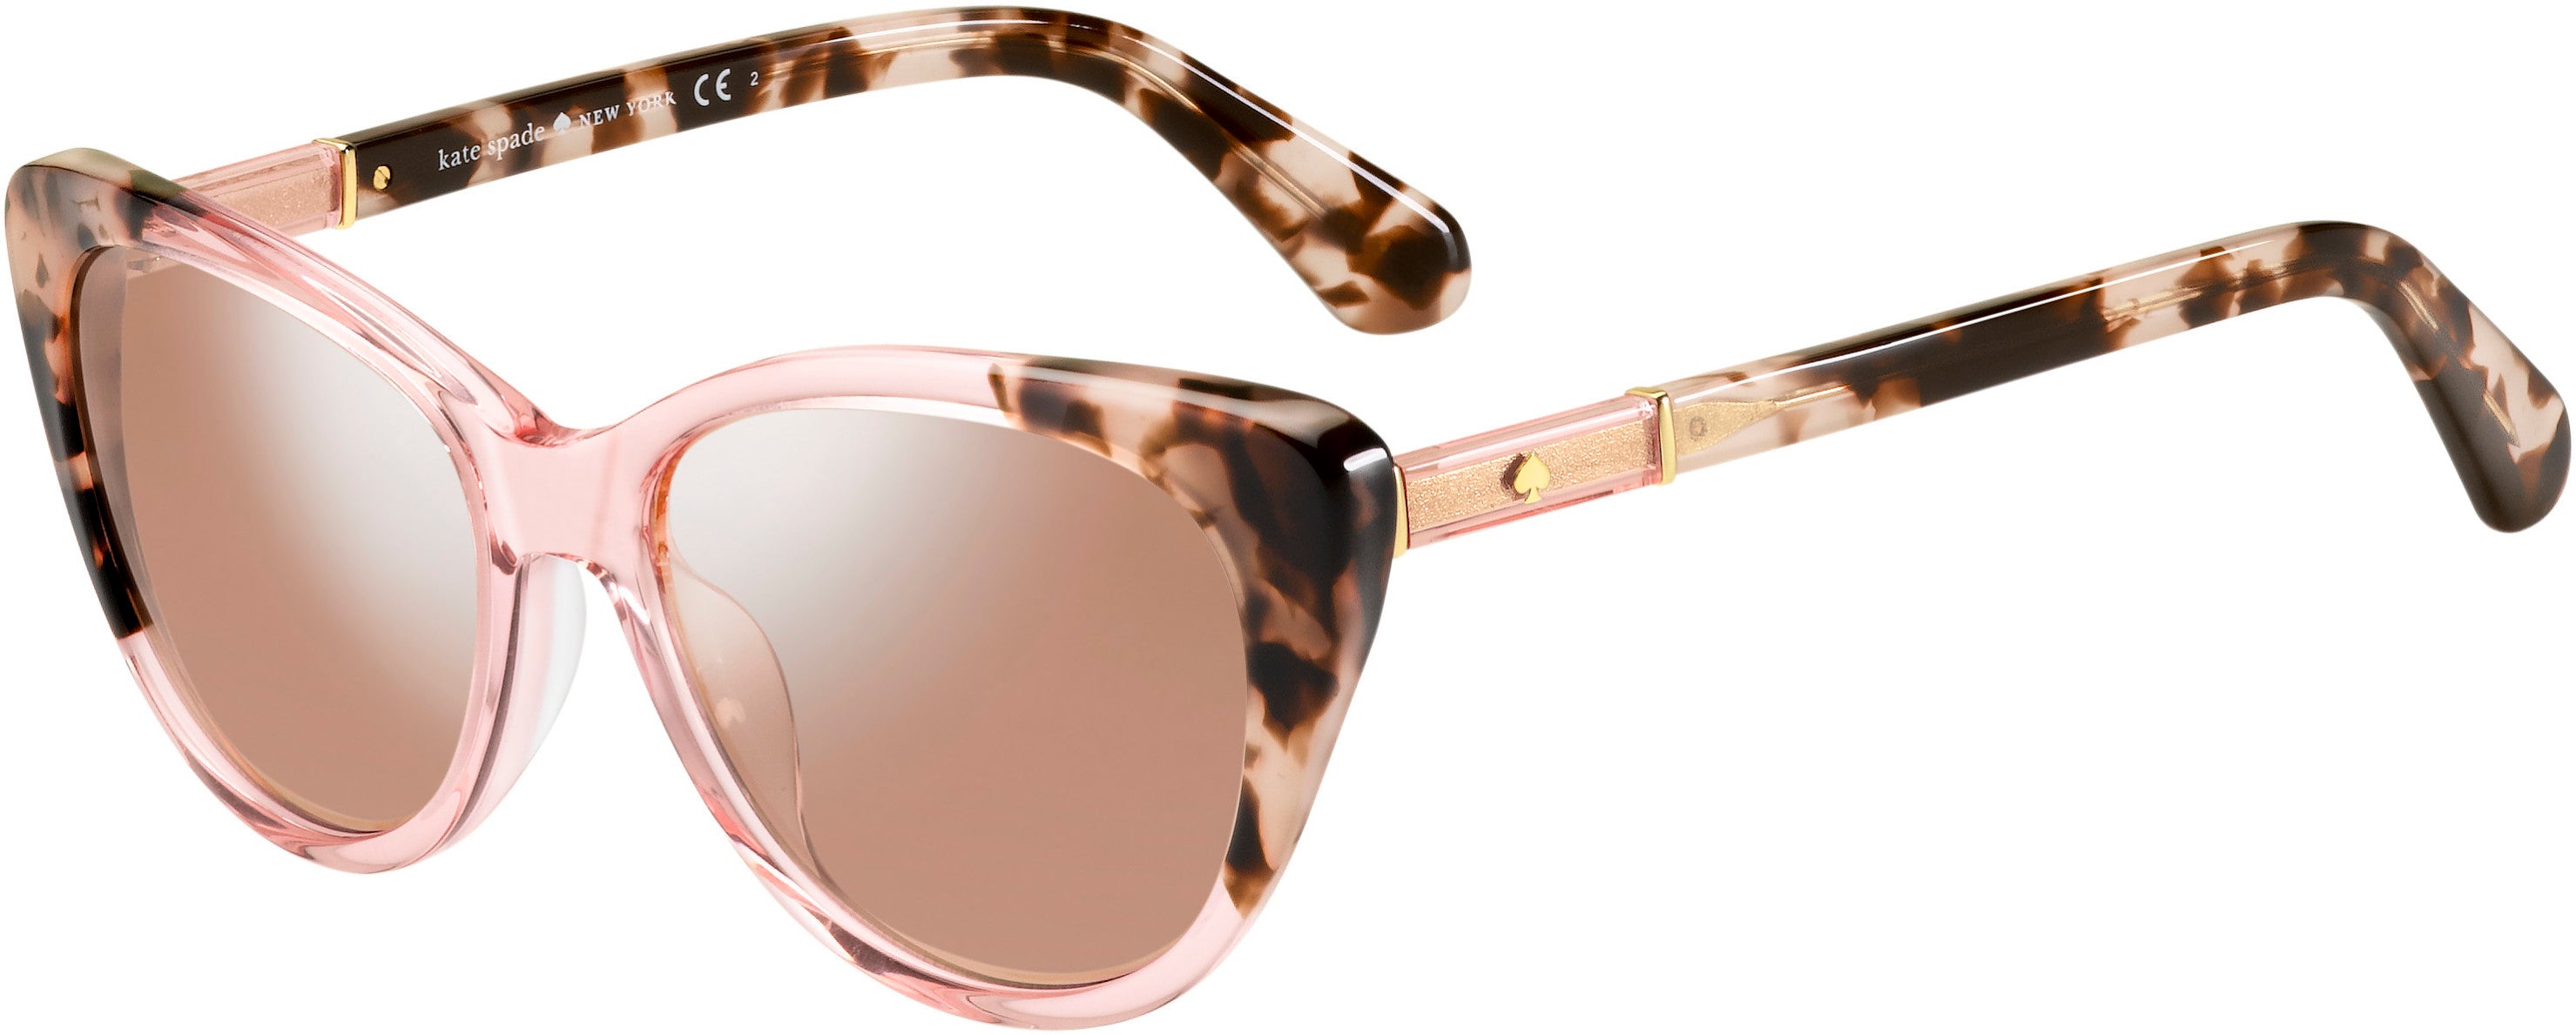 Kate Spade Sherylyn/S Cat Eye/butterfly Sunglasses 0OO4-0OO4  Pink Havana Pink (2S Pink Flash Silver)